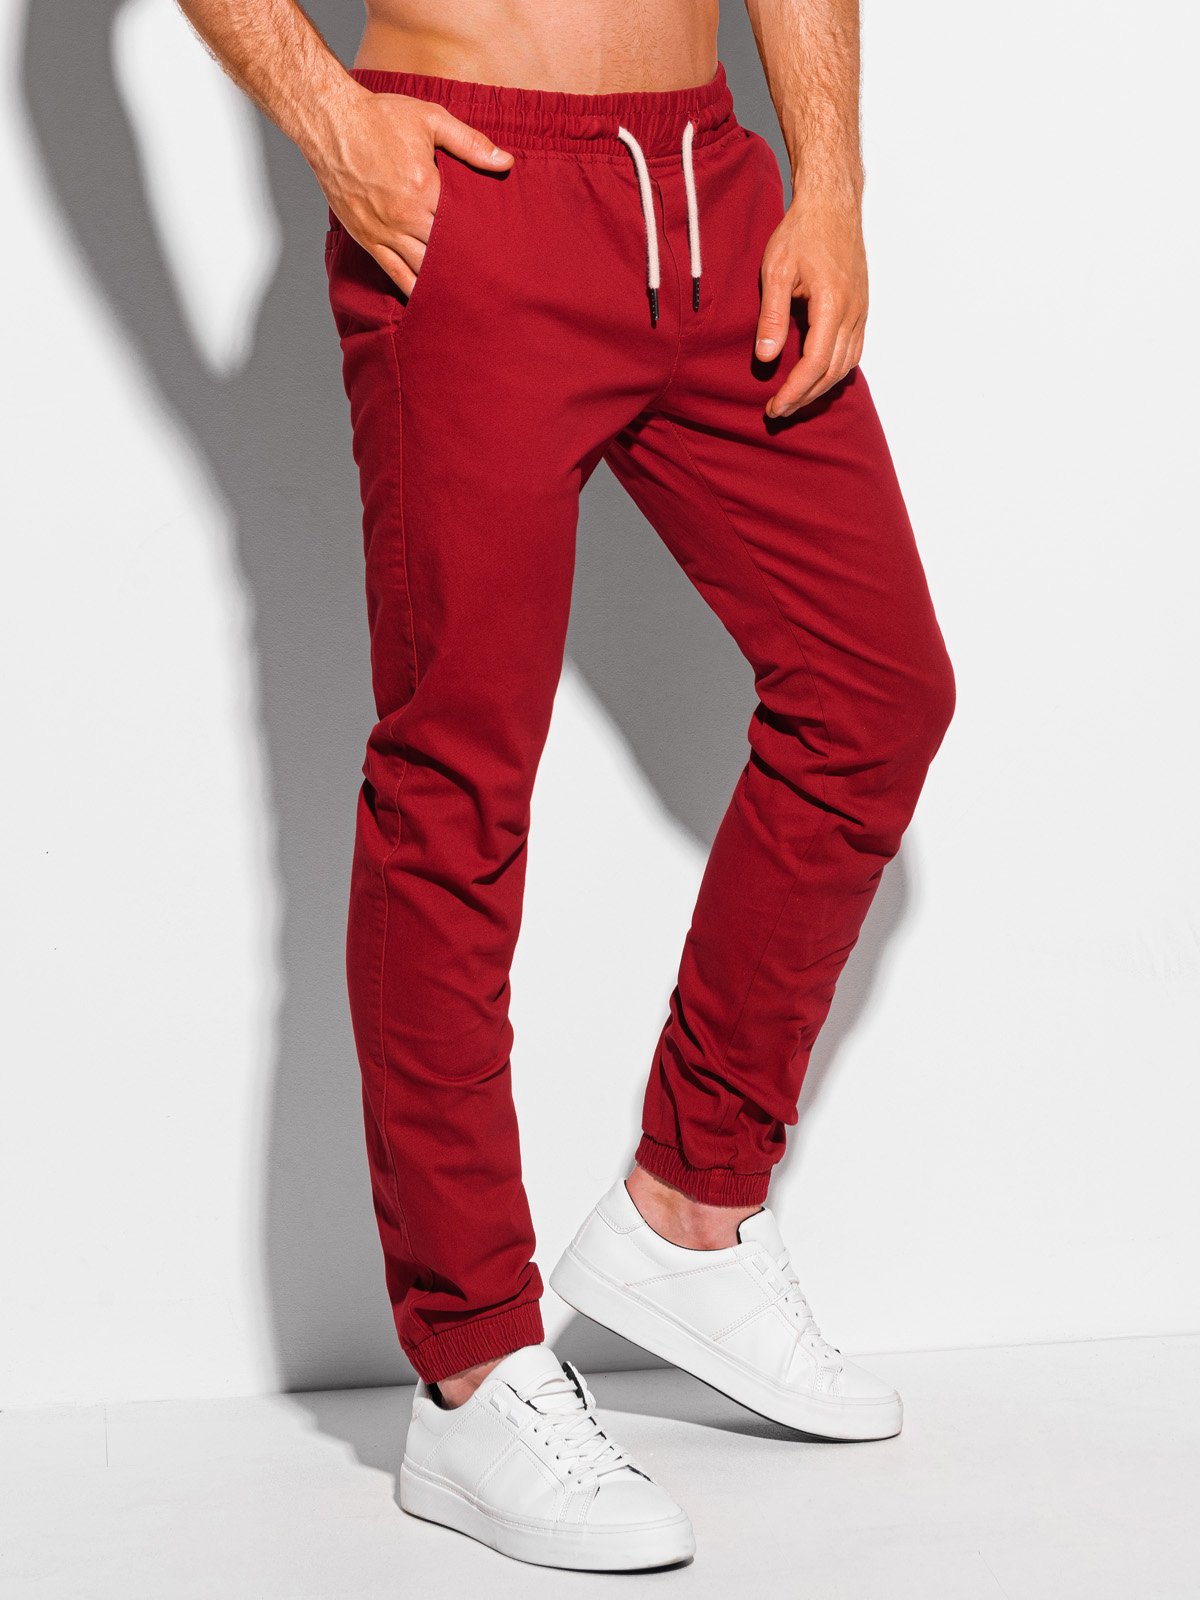 Men's pants joggers P1091 - red  MODONE wholesale - Clothing For Men